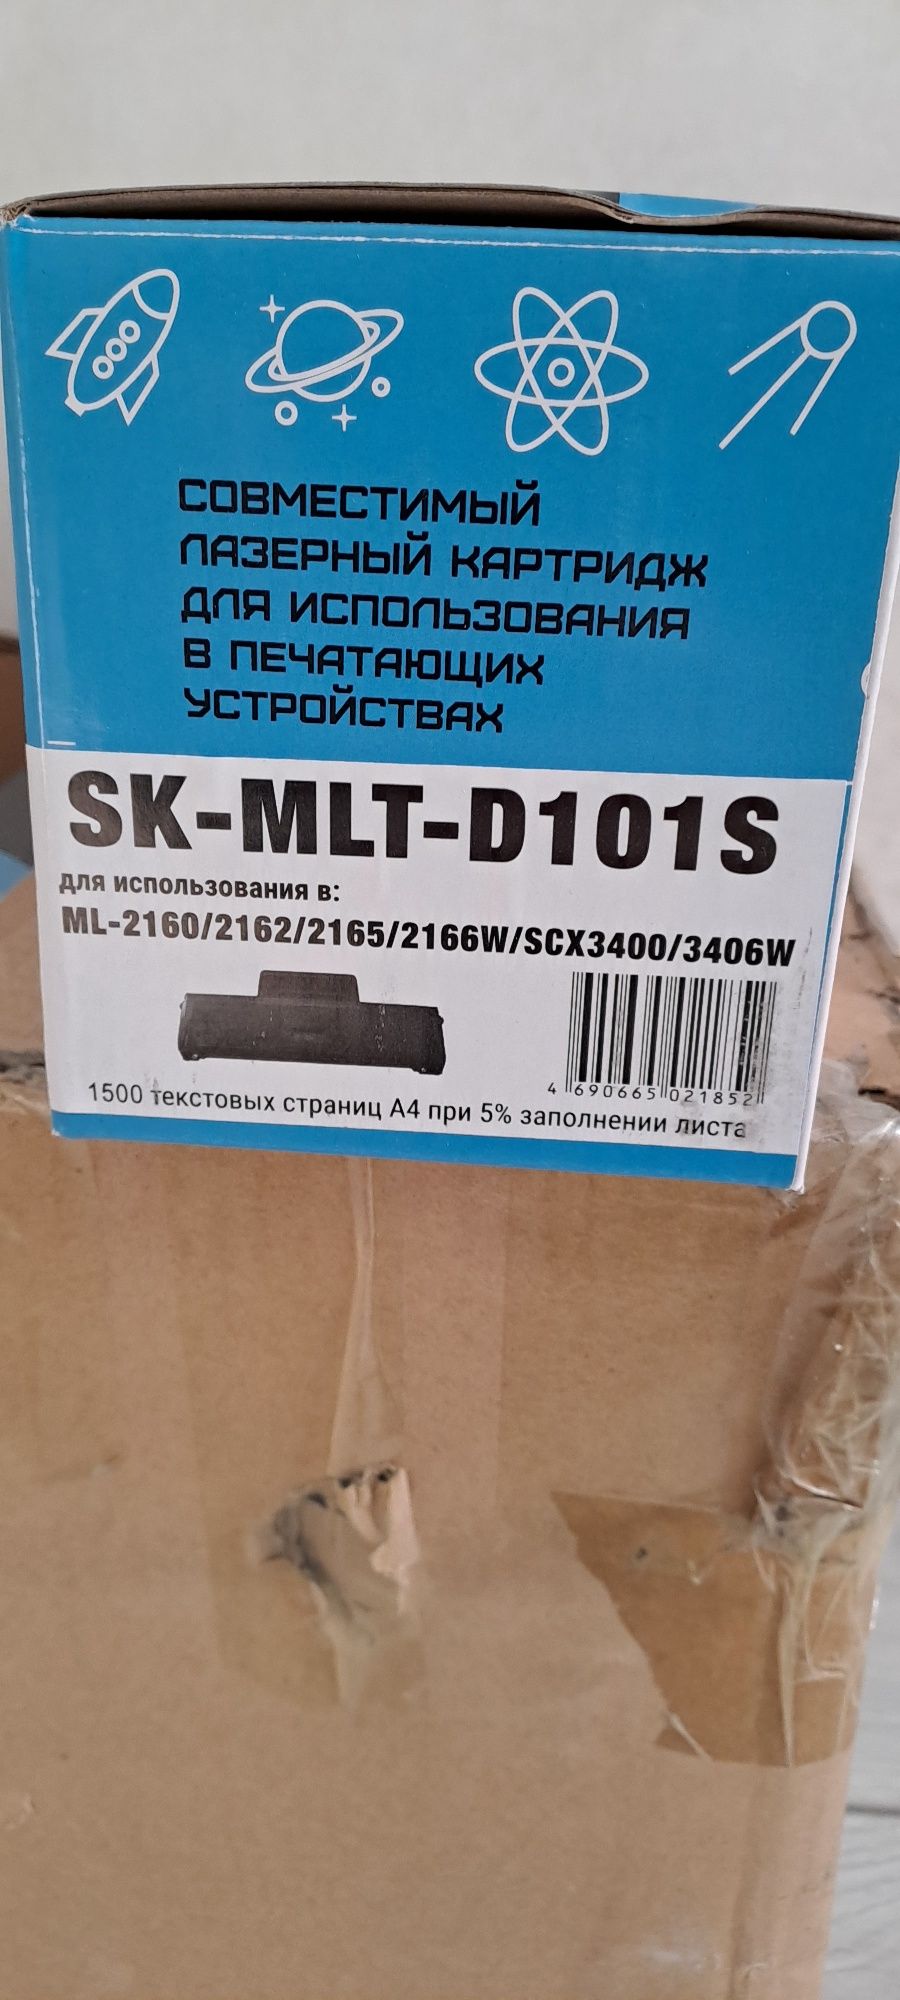 Картридж SK-MLT- D101S